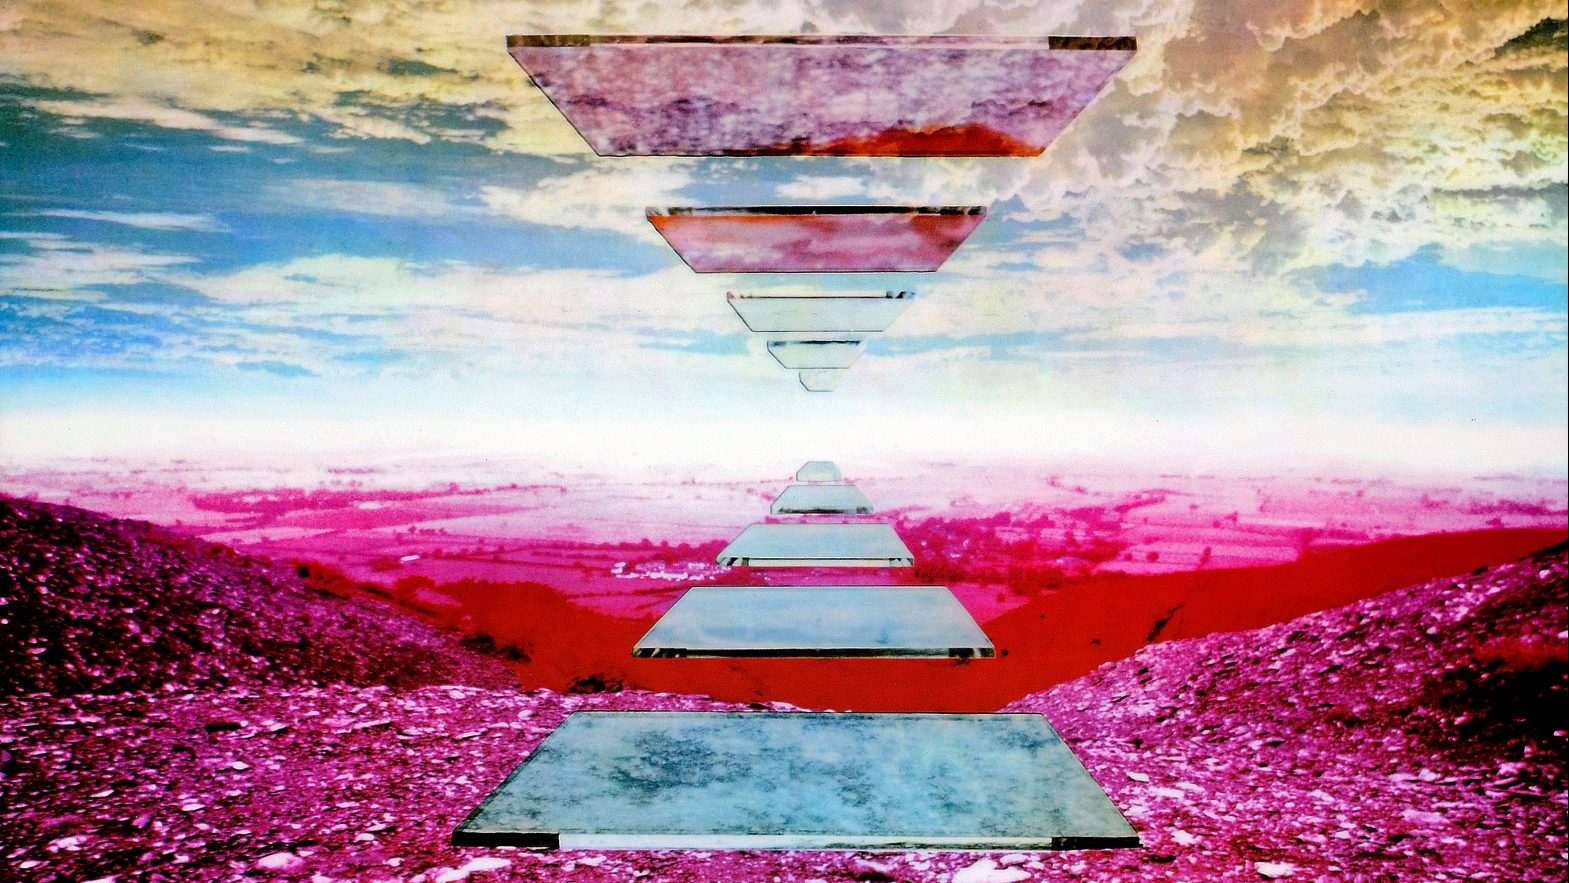  the poster for Tangerine Dream’s 1976 album Stratosfear